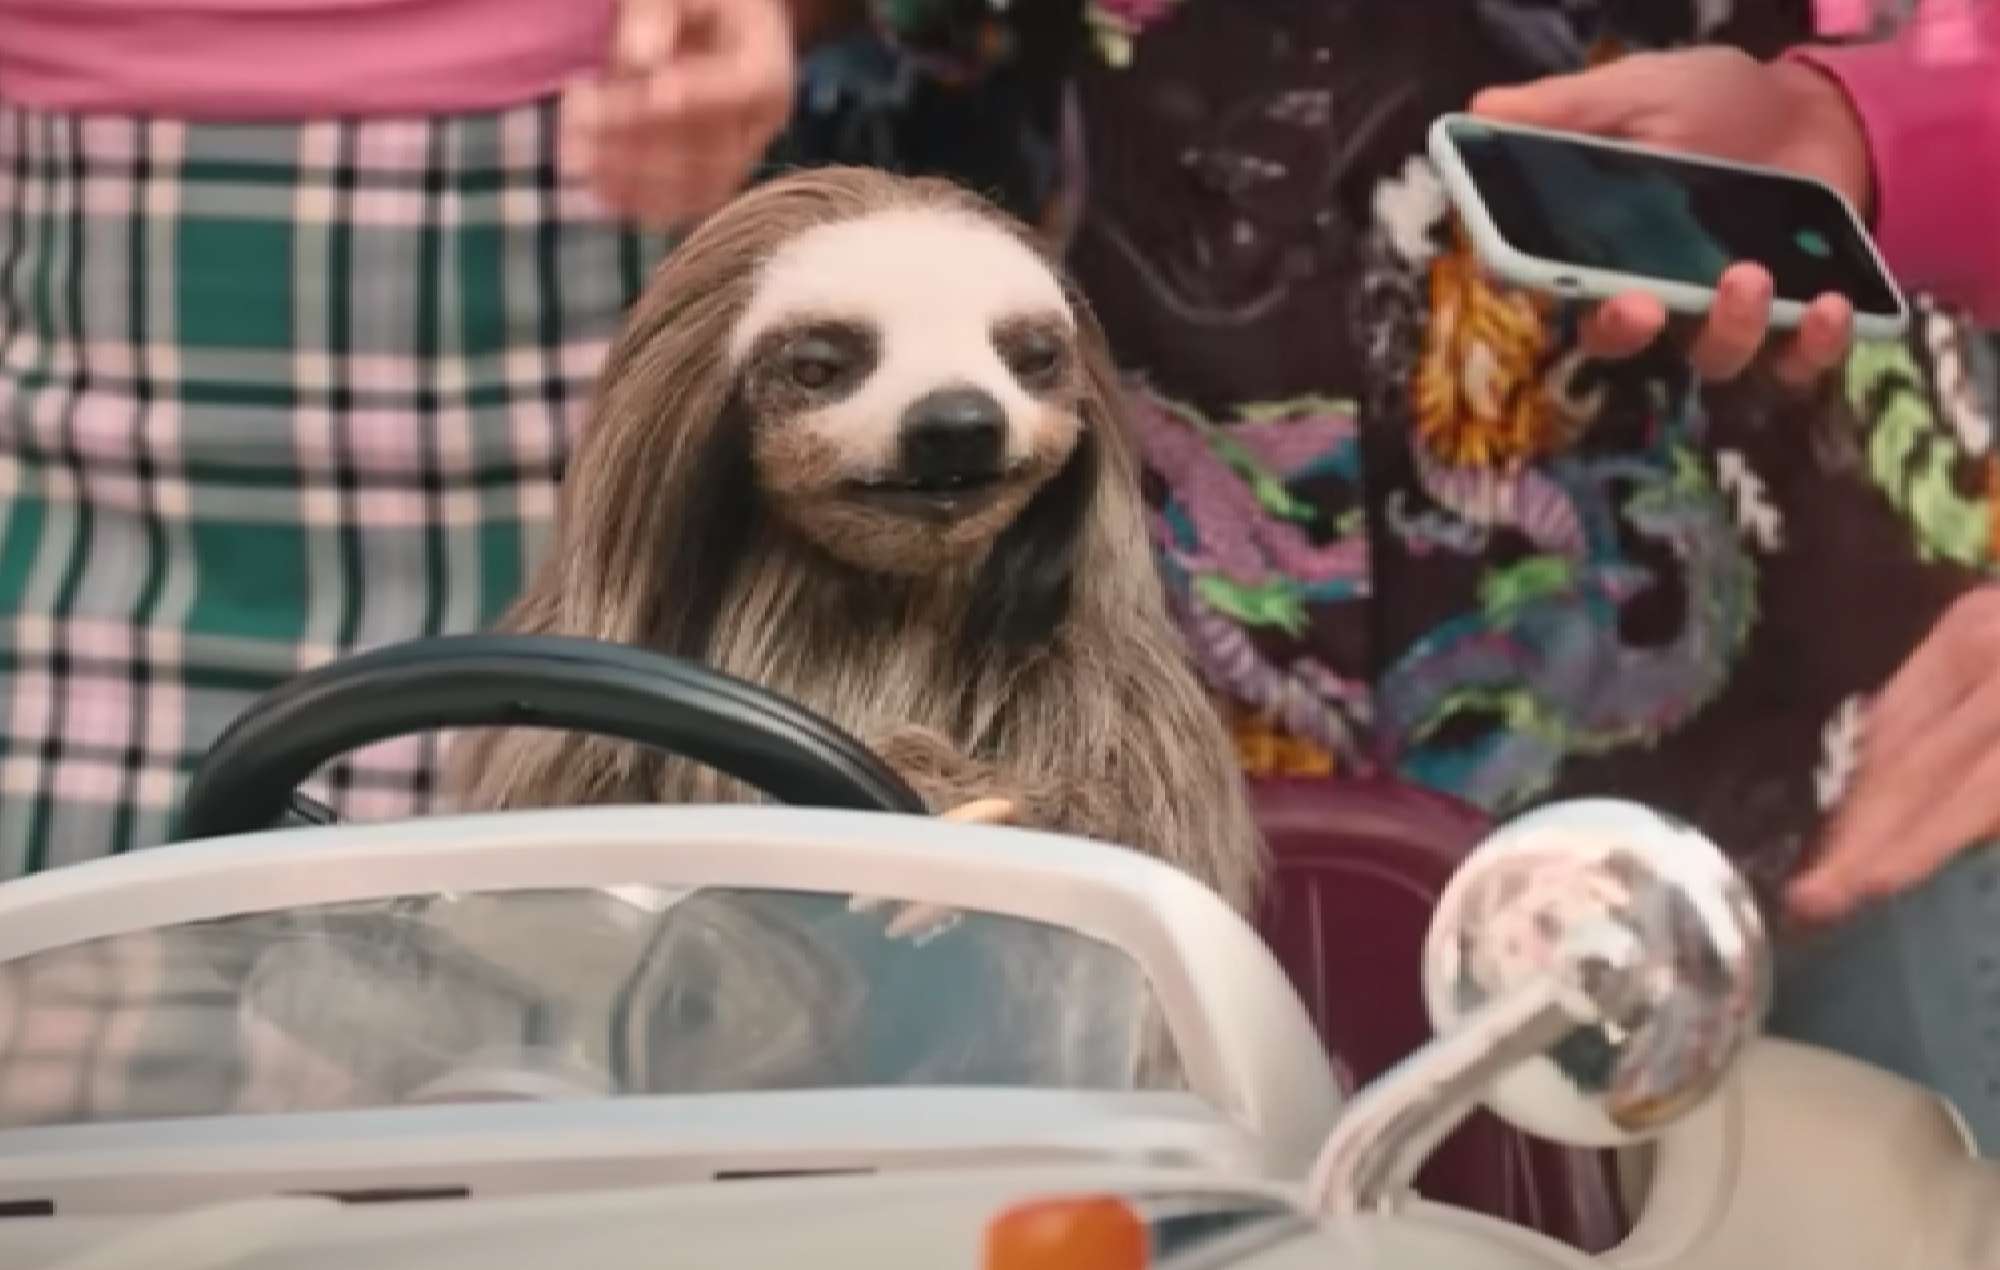 Social media reacts to trailer for “killer sloth” horror movie ‘Slotherhouse’: “Cinema is so back”